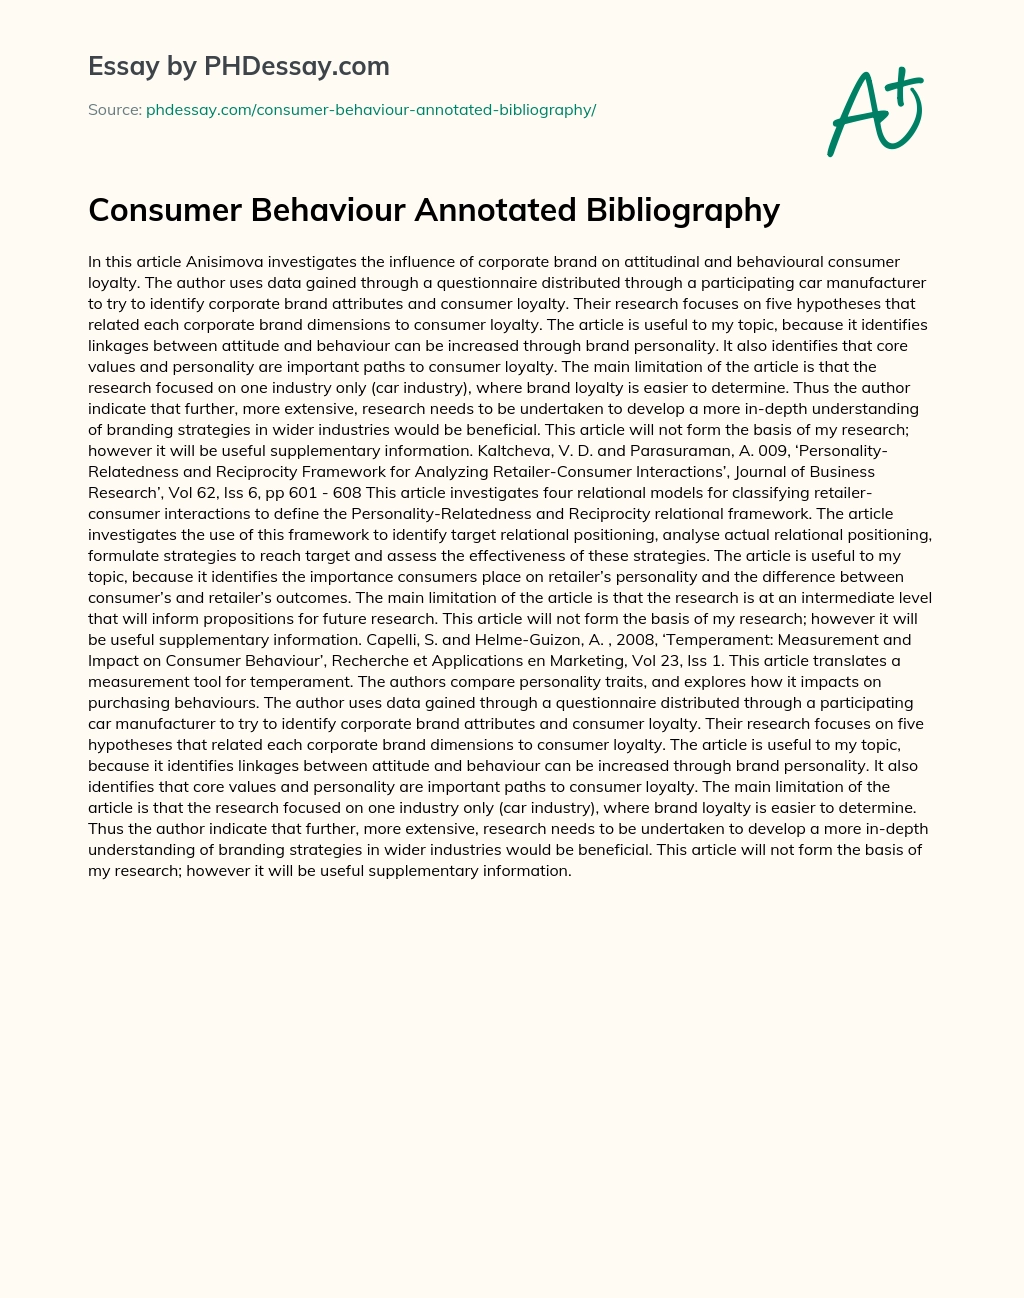 Consumer Behaviour Annotated Bibliography essay